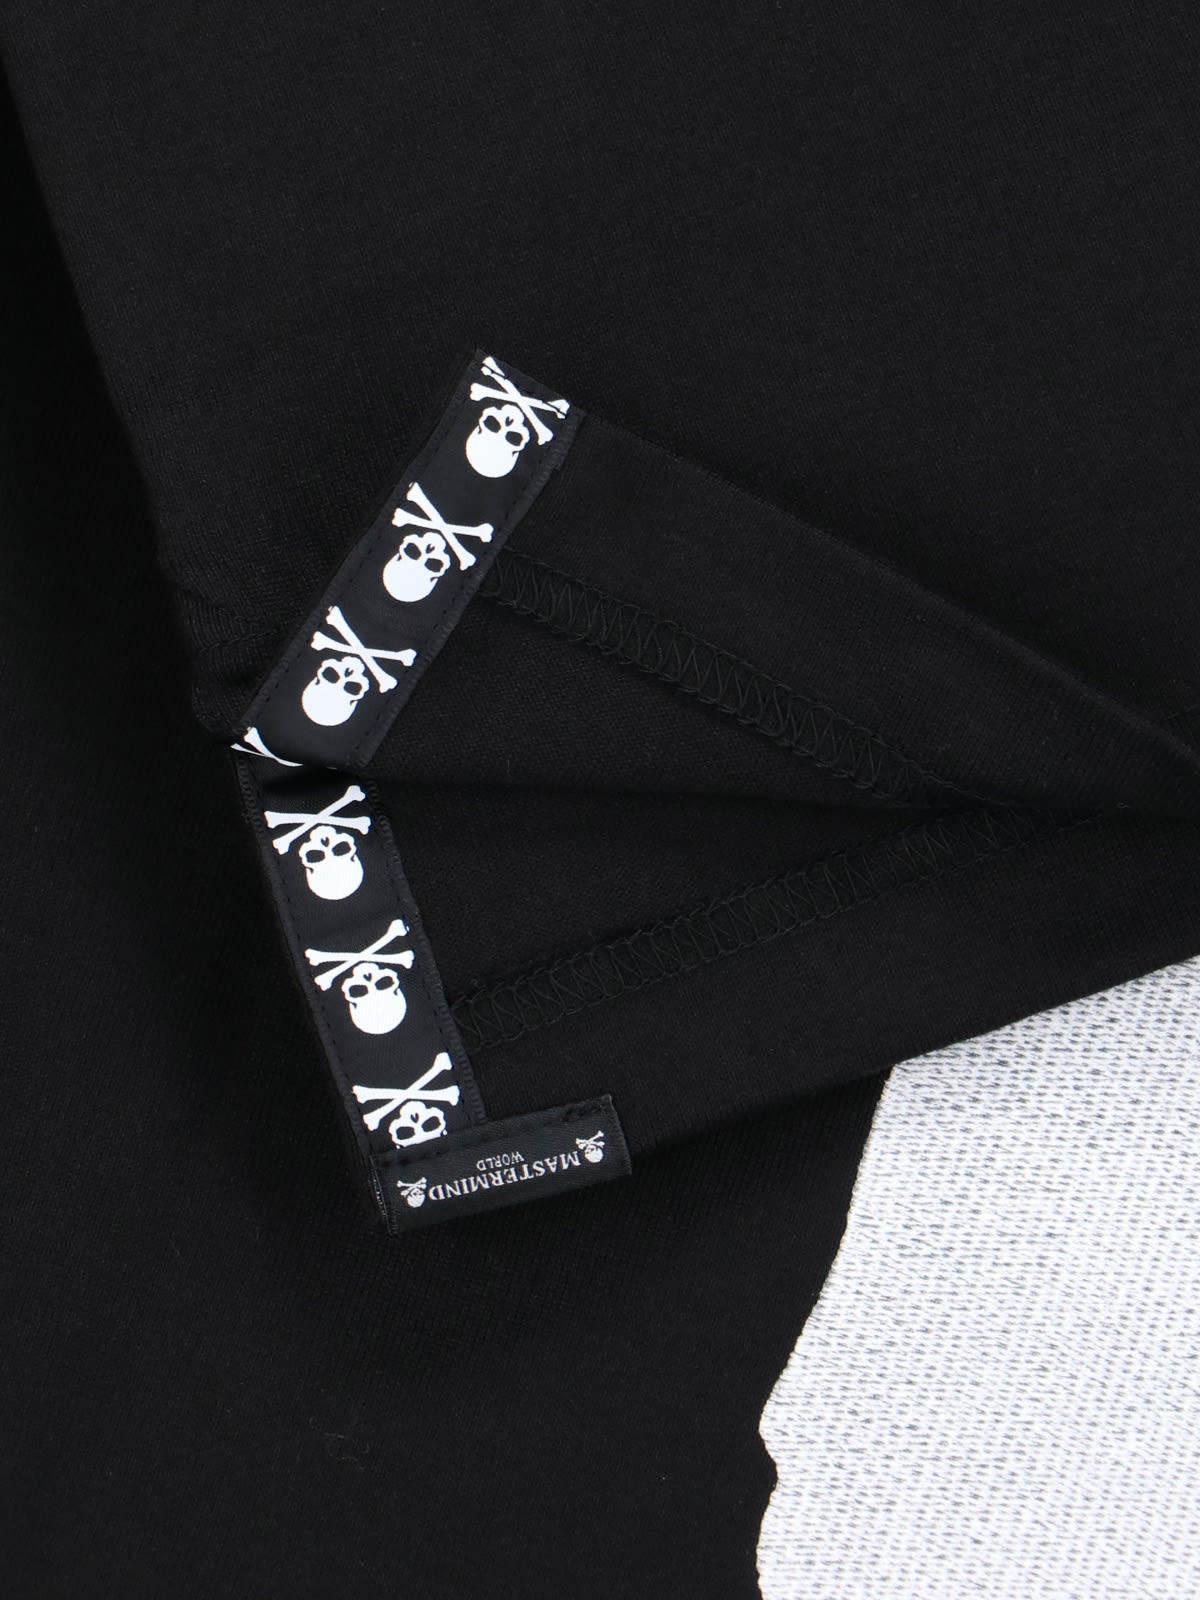 Shop Mastermind Japan Logo T-shirt In Black